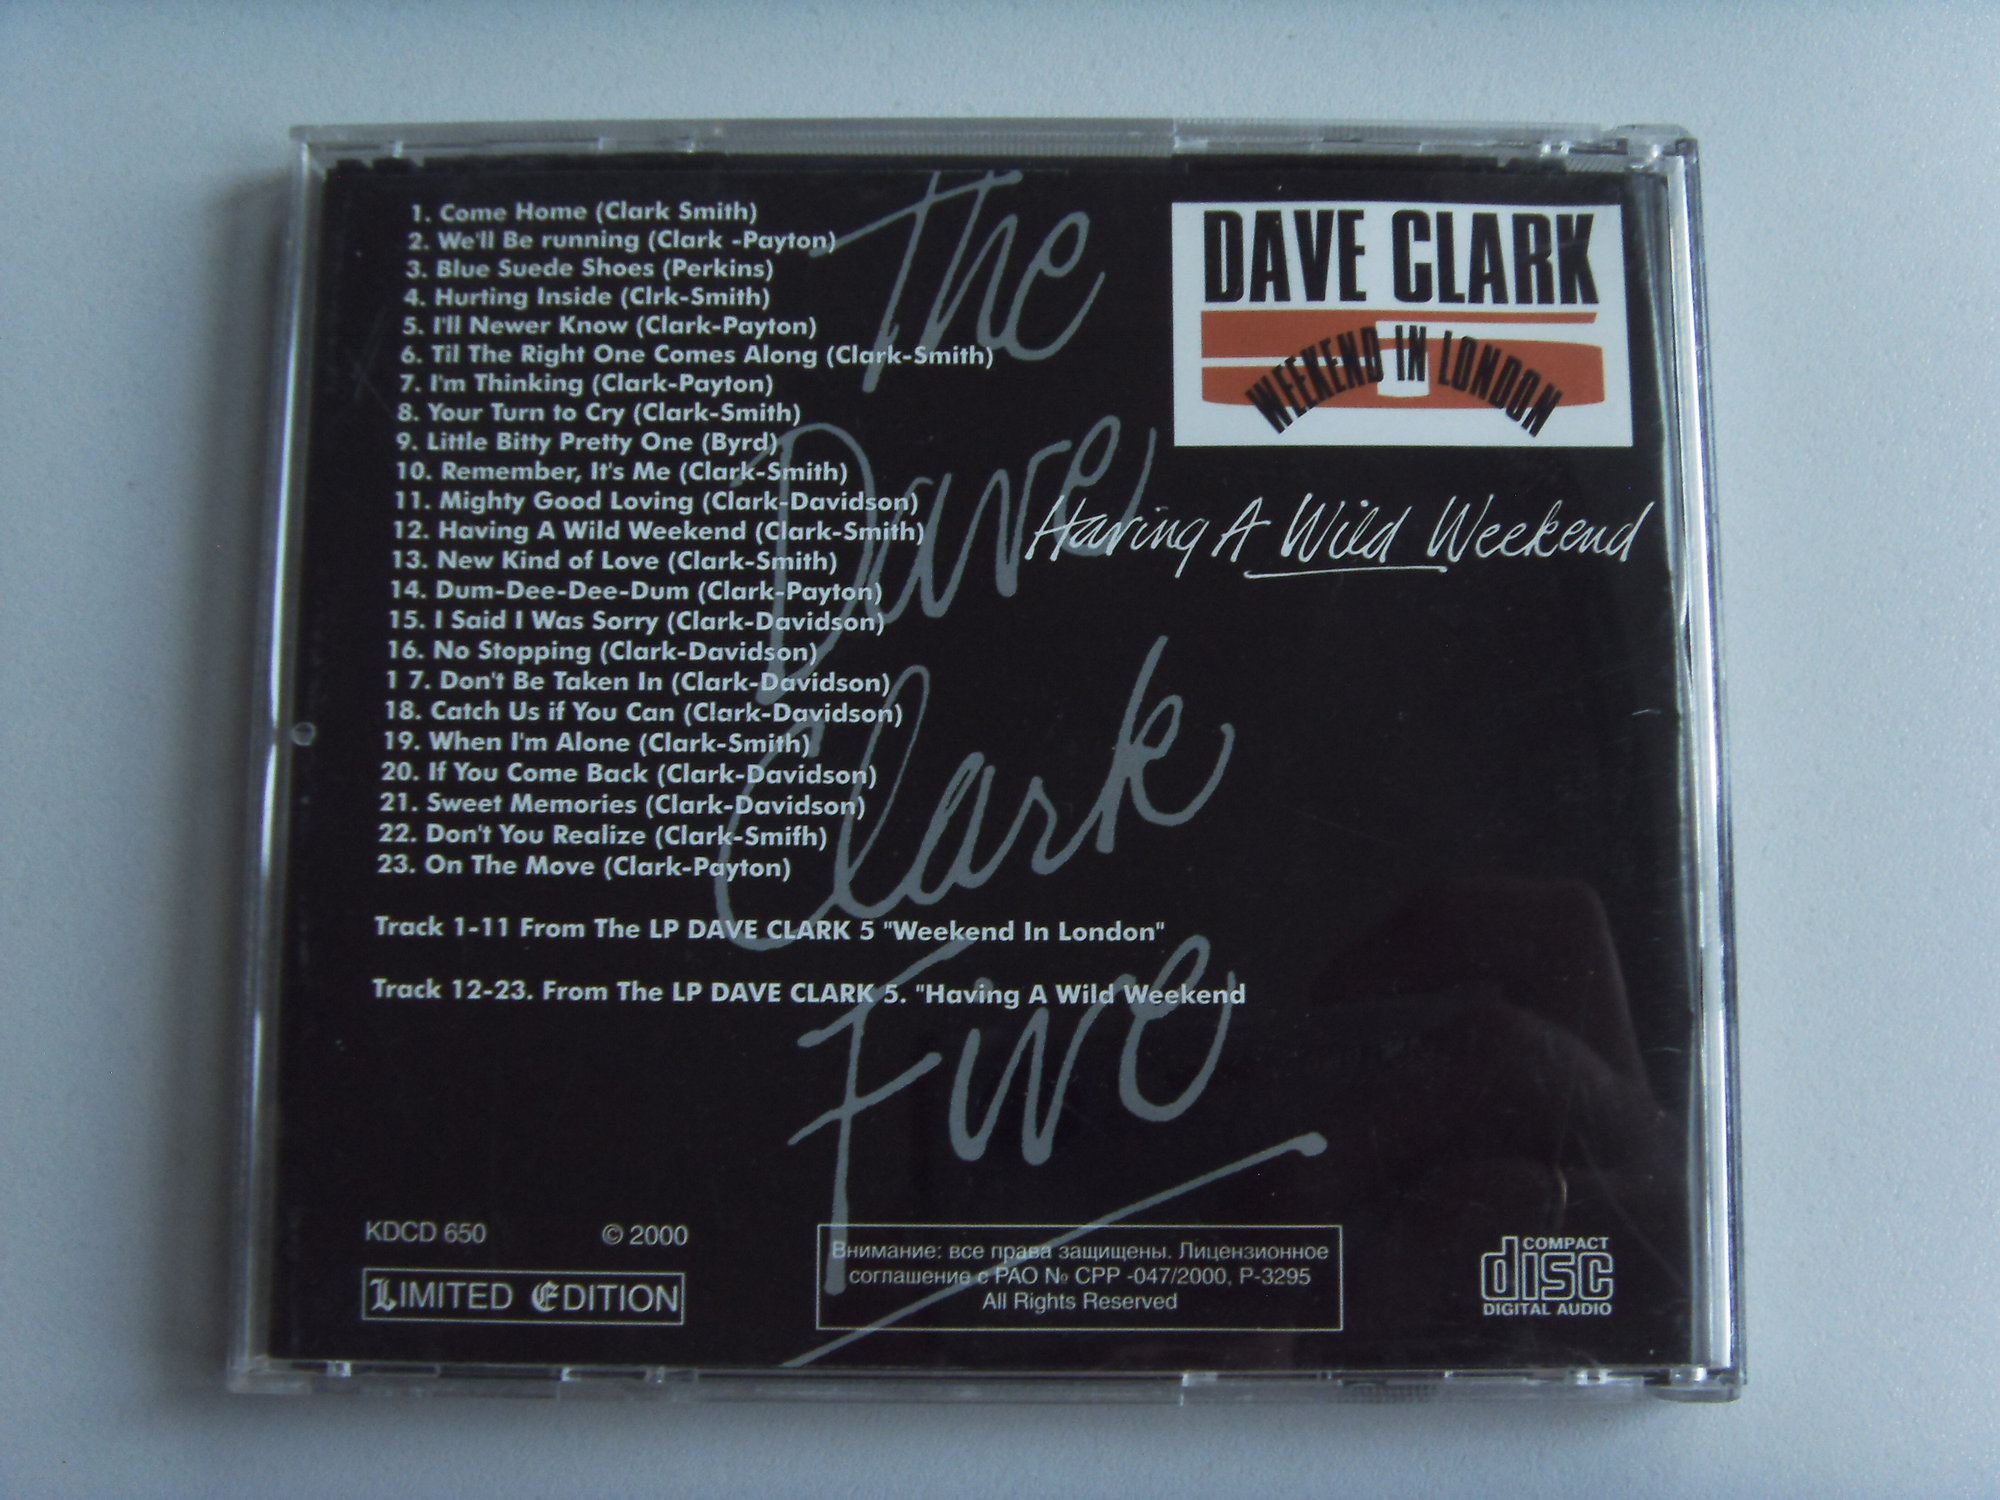 DAVE CLARK 5 Weekend in London / Having a wild wekend 2